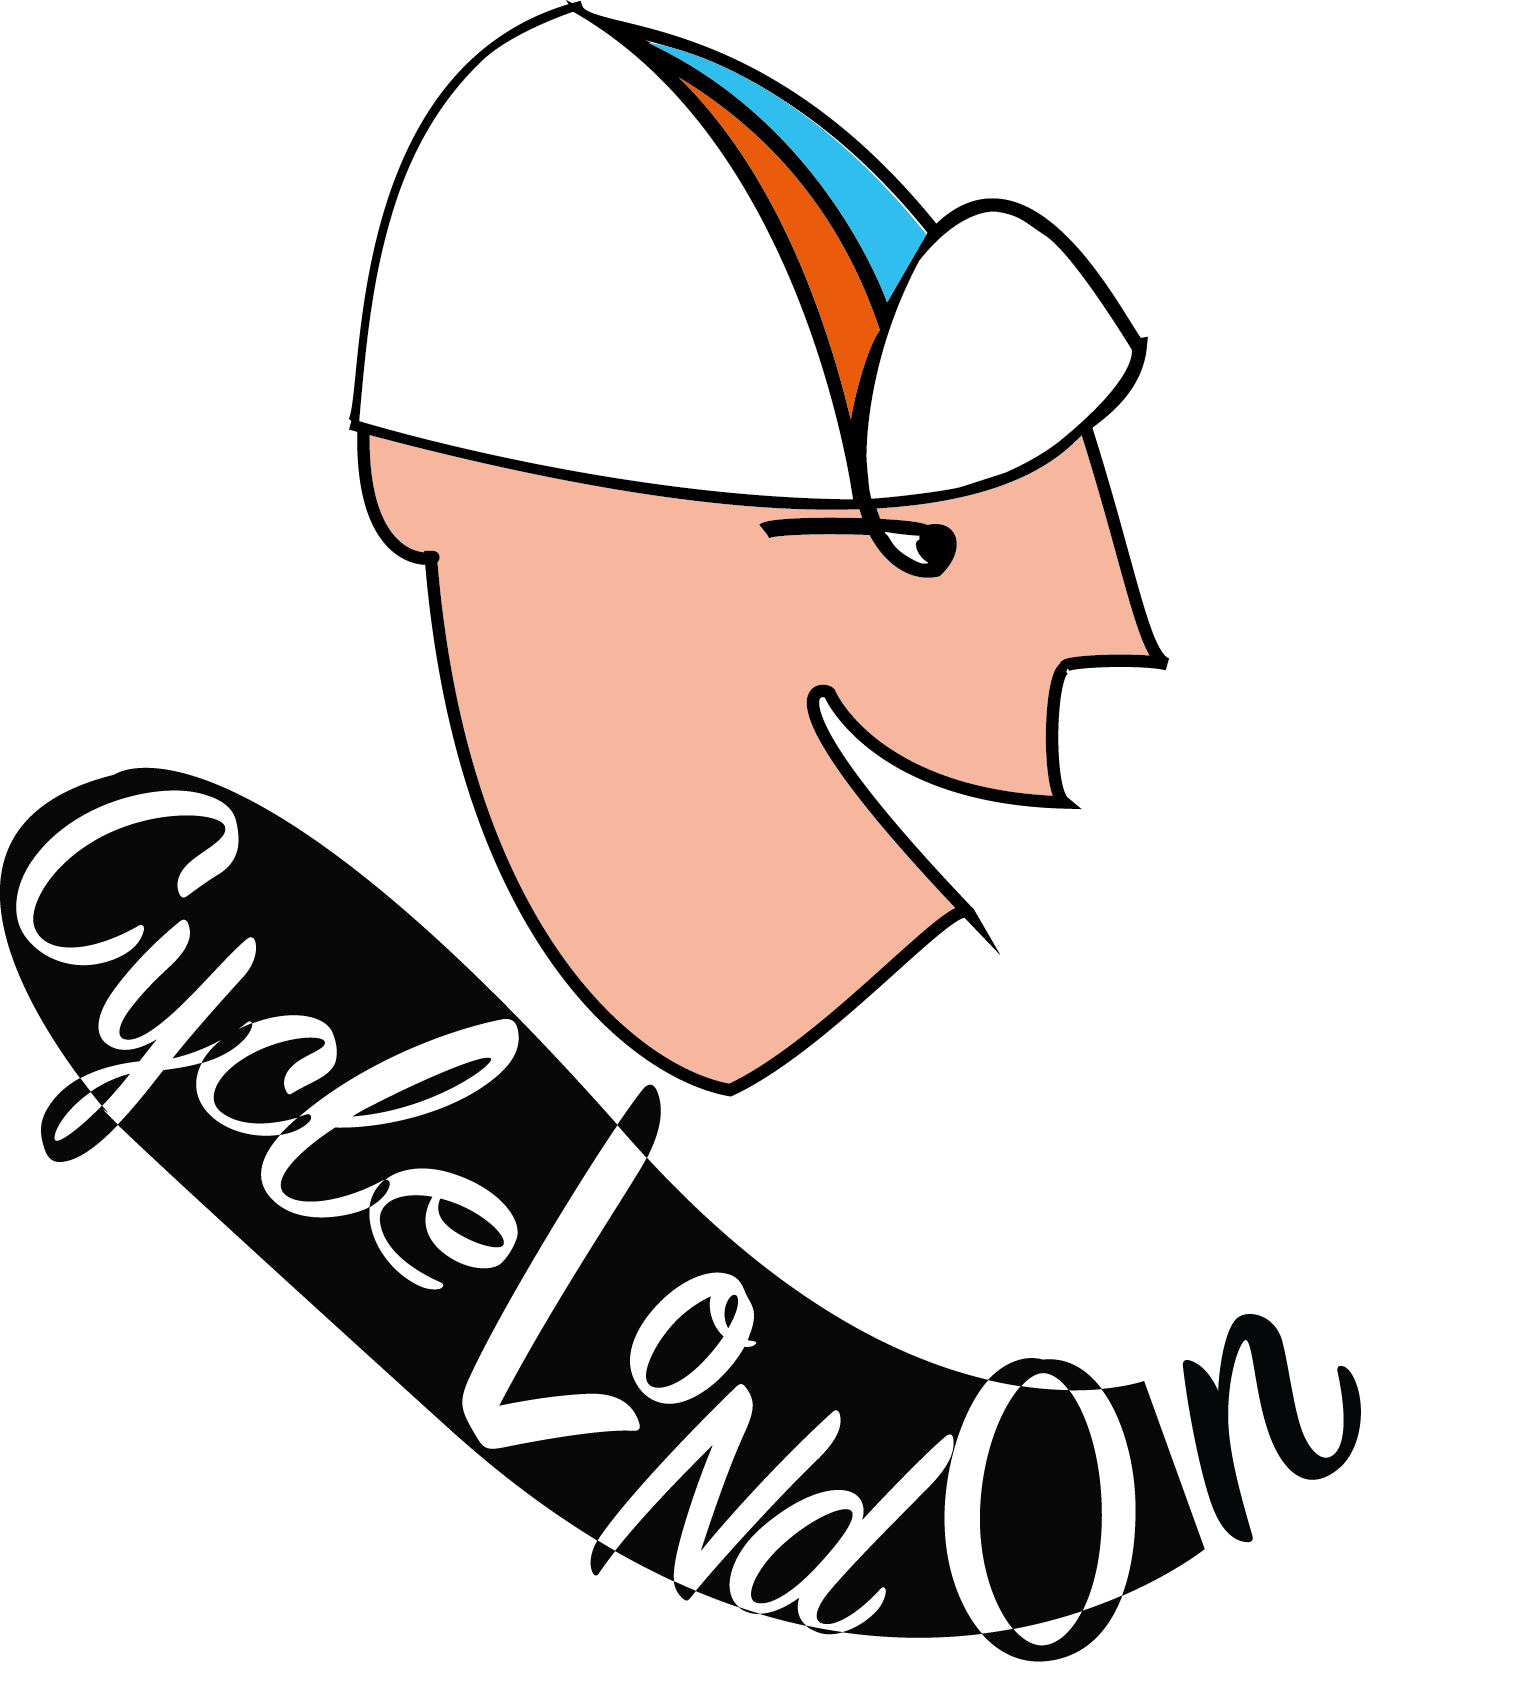 cyclelondon logo